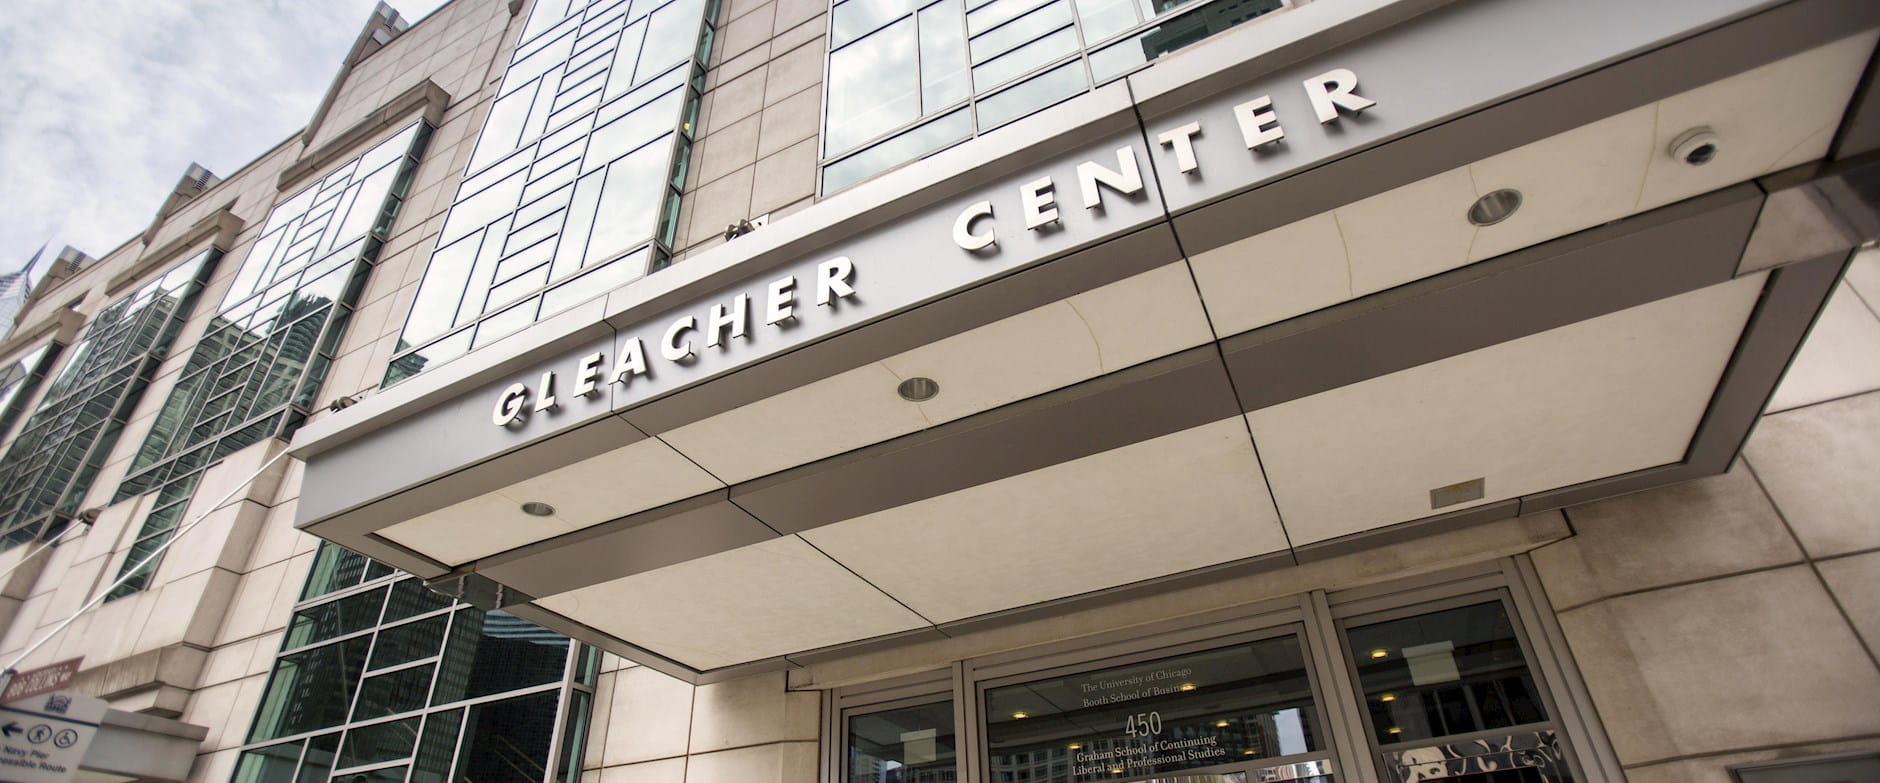 About Gleacher Center - Gleacher Center